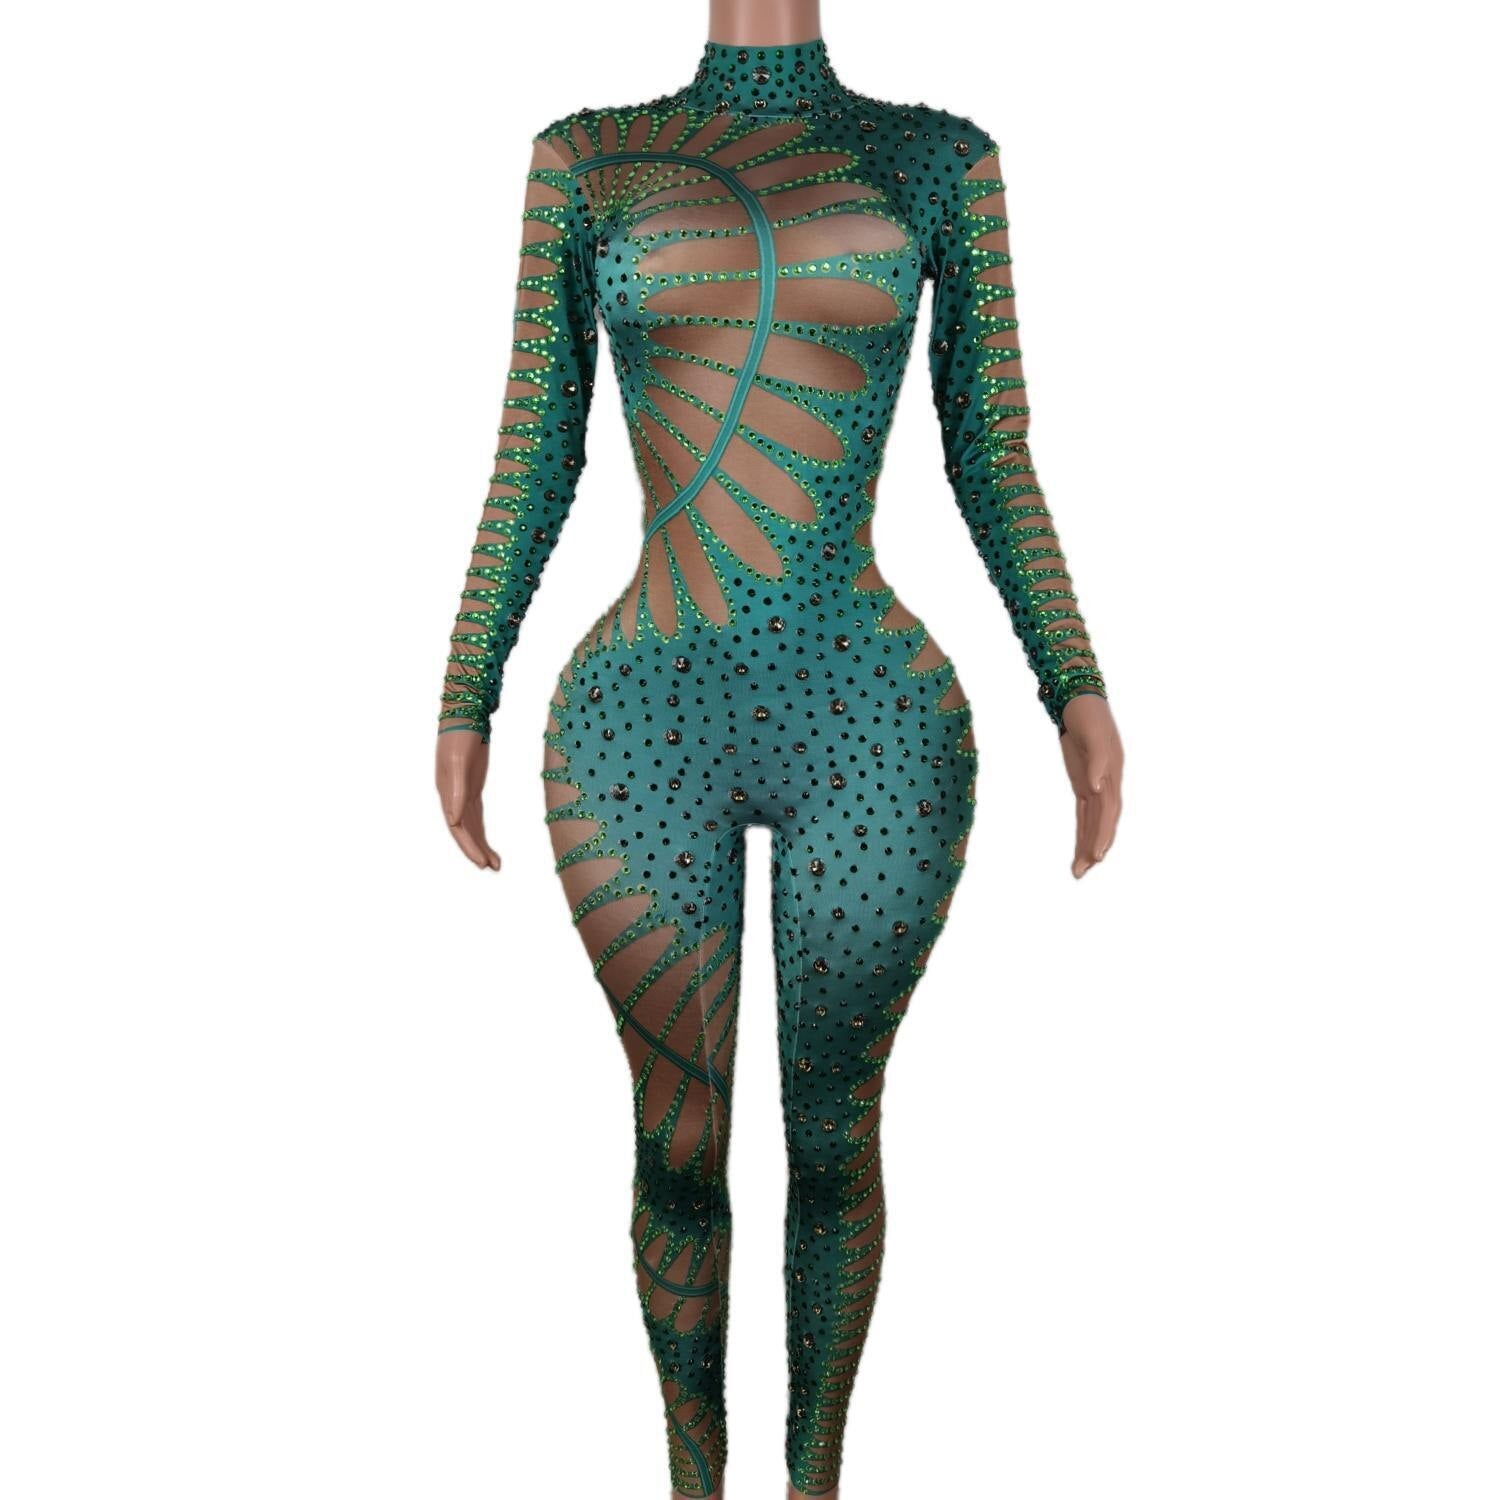 Green Grass Rhinestone Jumpsuit Woman Night Club Party Stretch Stage Wear Celebrate Bodysuit Performance Costume